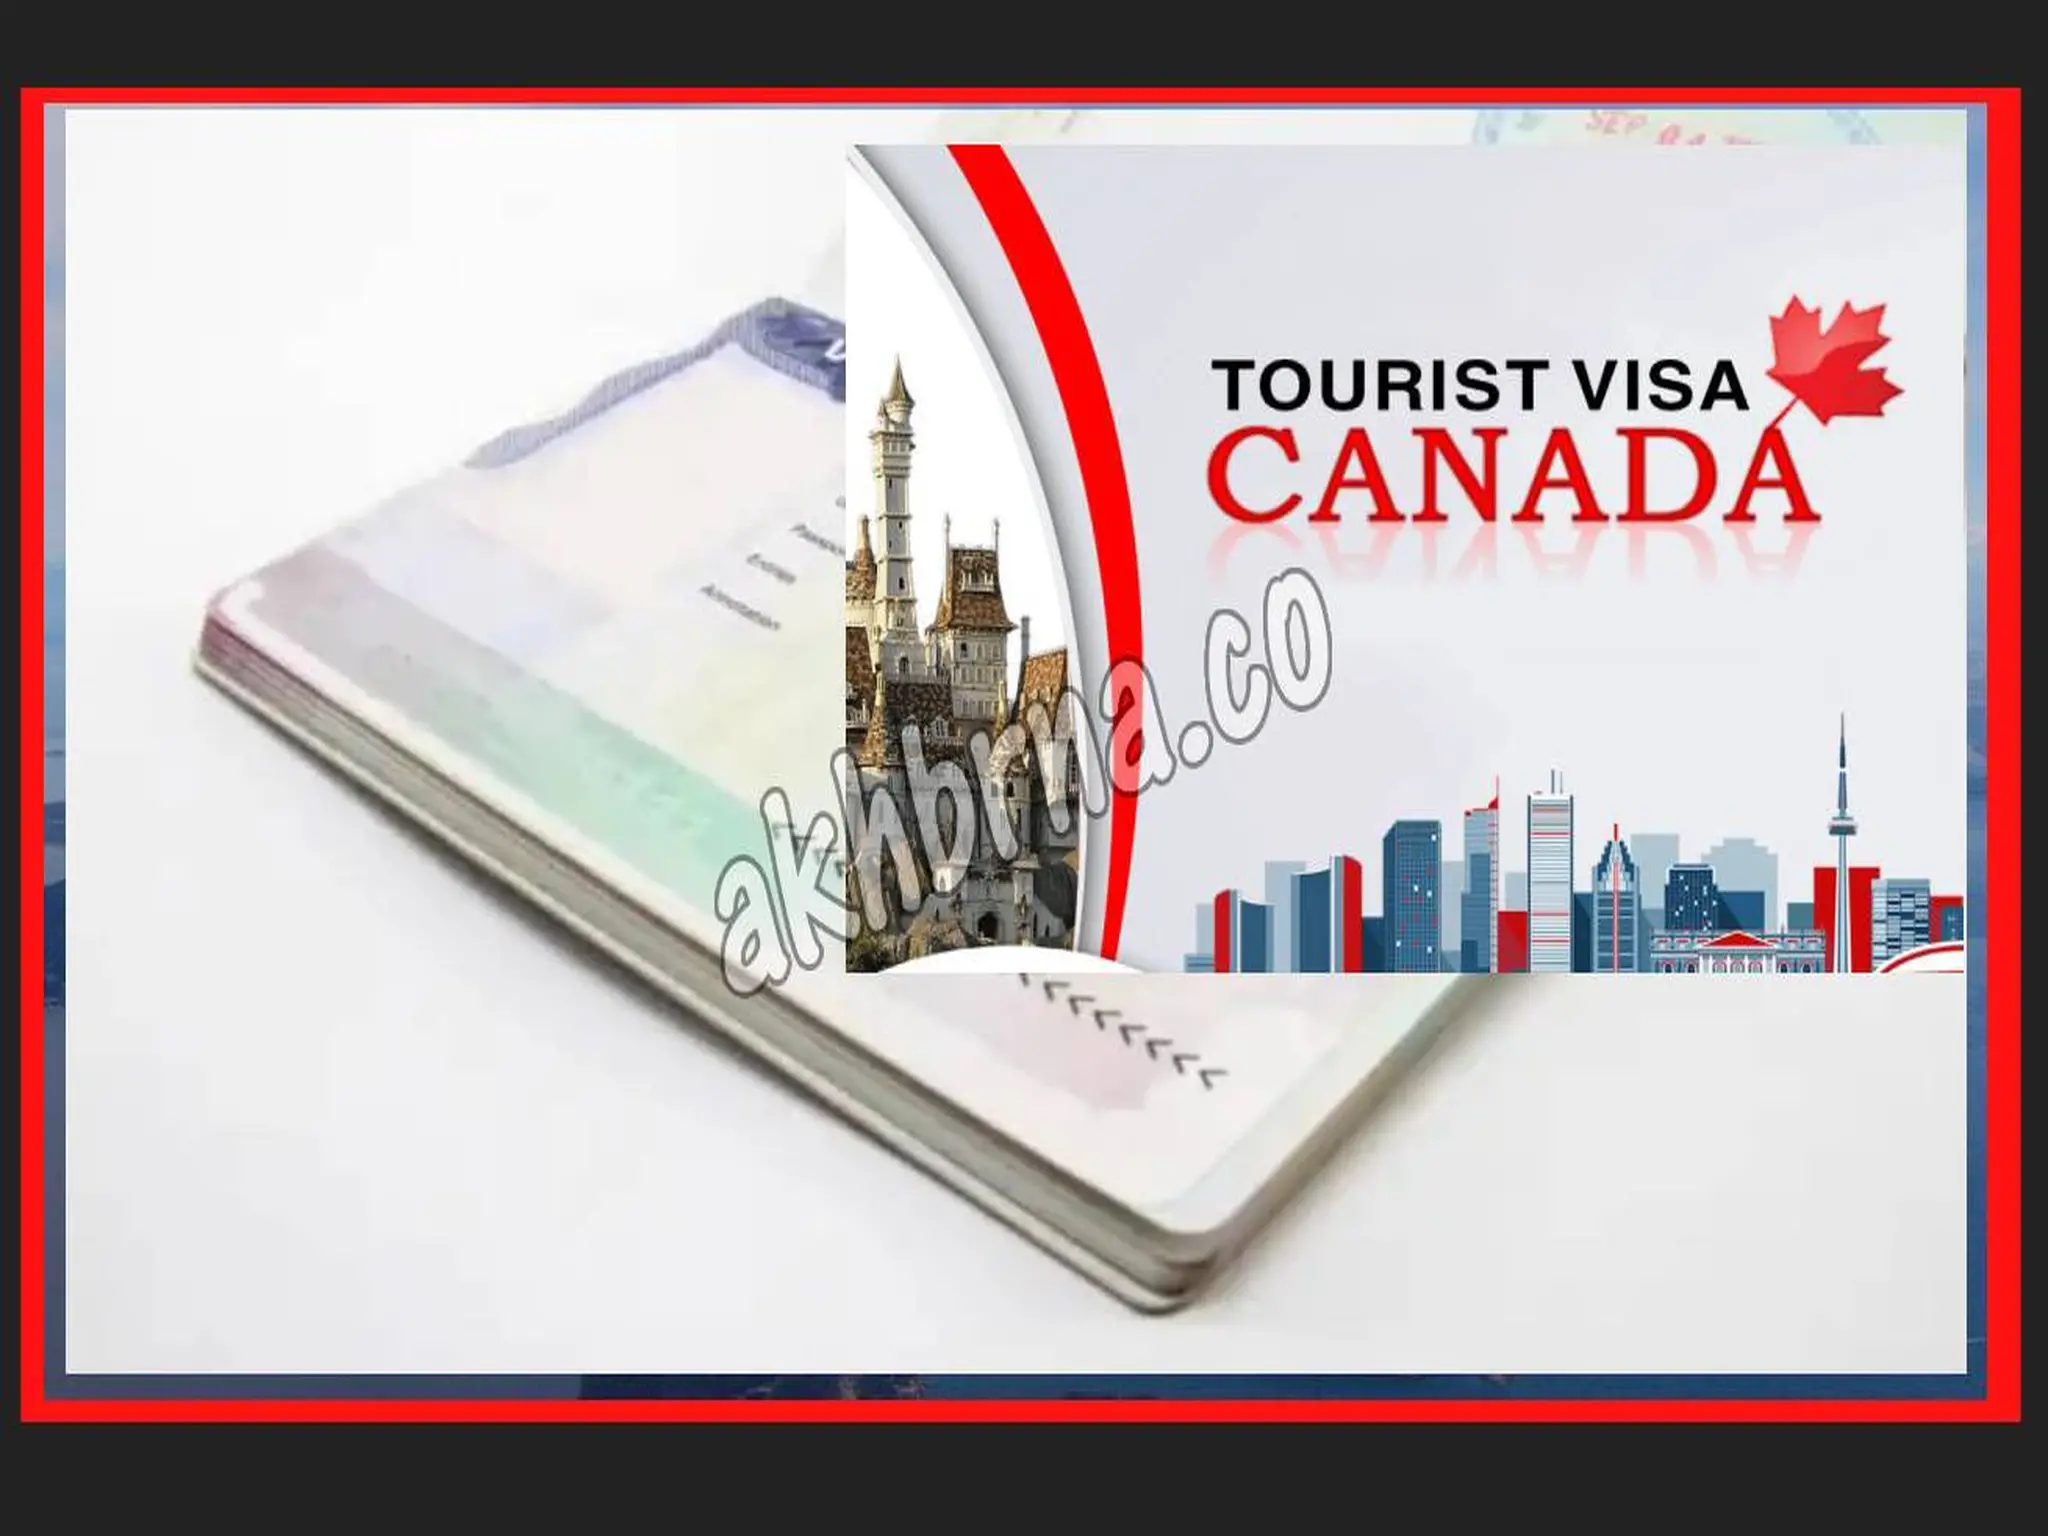 How Do I Get Approved for a Tourist Visa for Canada?